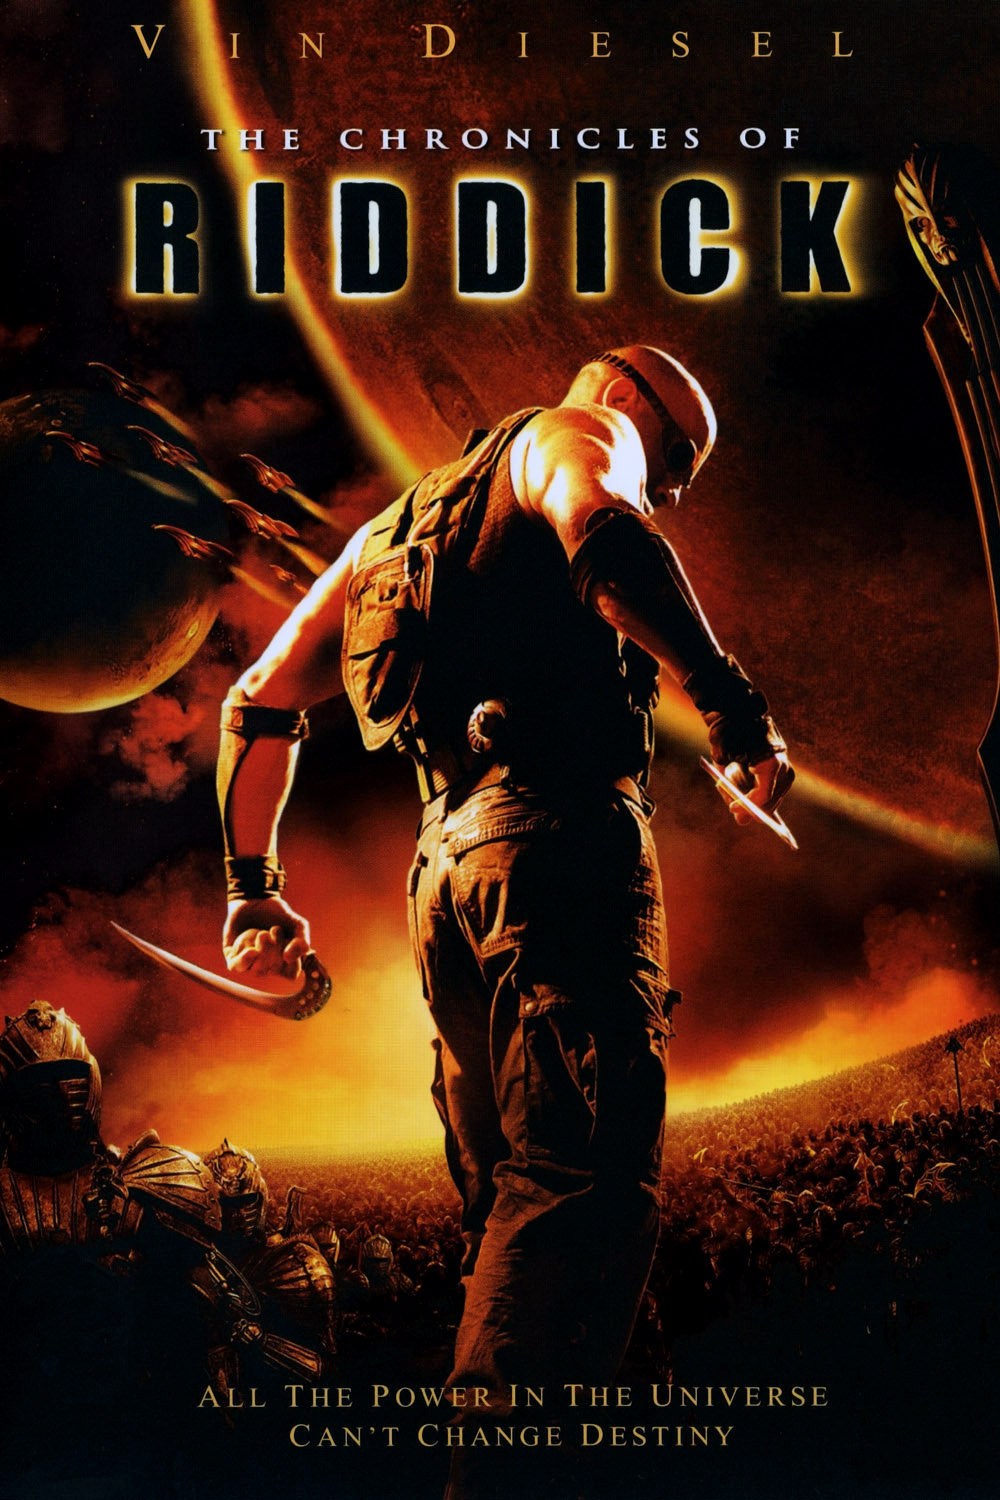 Watch Riddick(2013) movie full free online ~ Watch movies free online